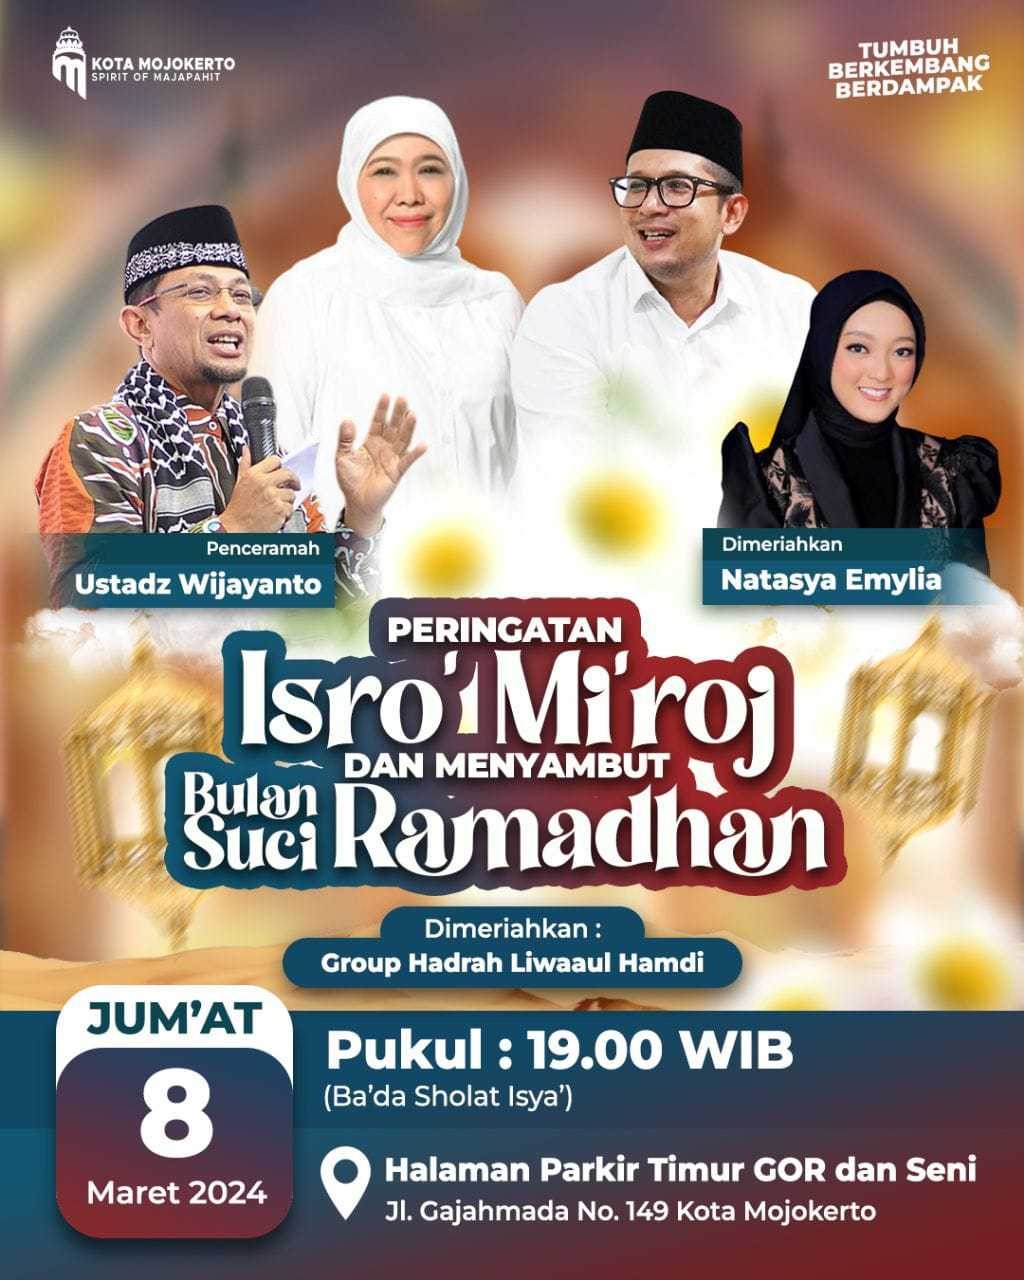 Peringati Isra Mi'raj dan Sambut Ramadhan, Pemkot Gelar Pengajian Akbar bersama Ustad Wijayanto